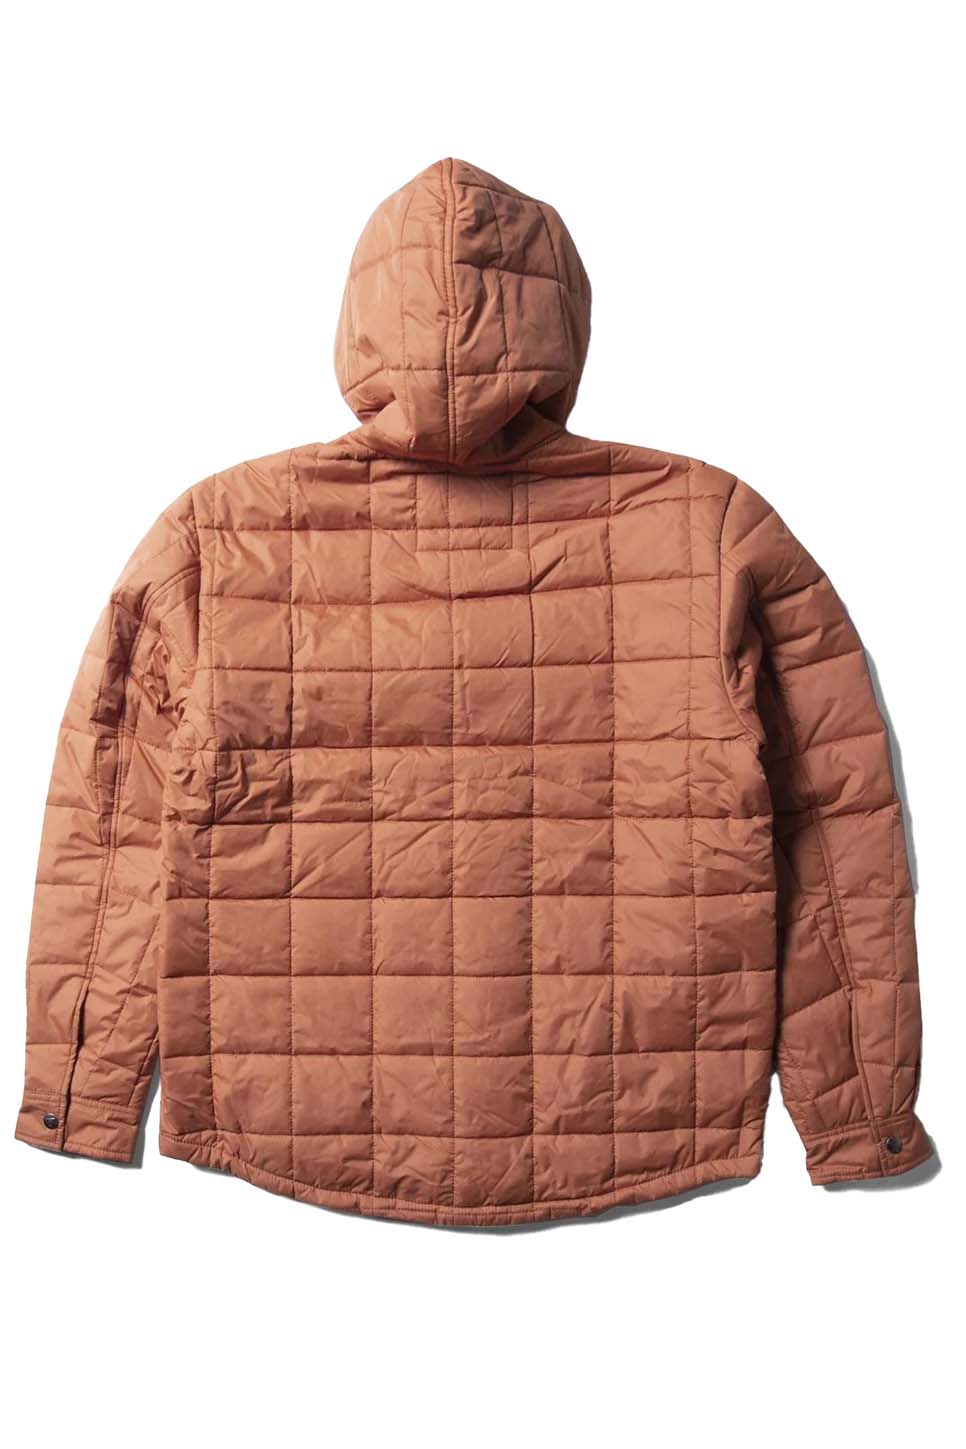 Vissla - Cronkite II Eco Hooded Jacket - Terracotta - Back